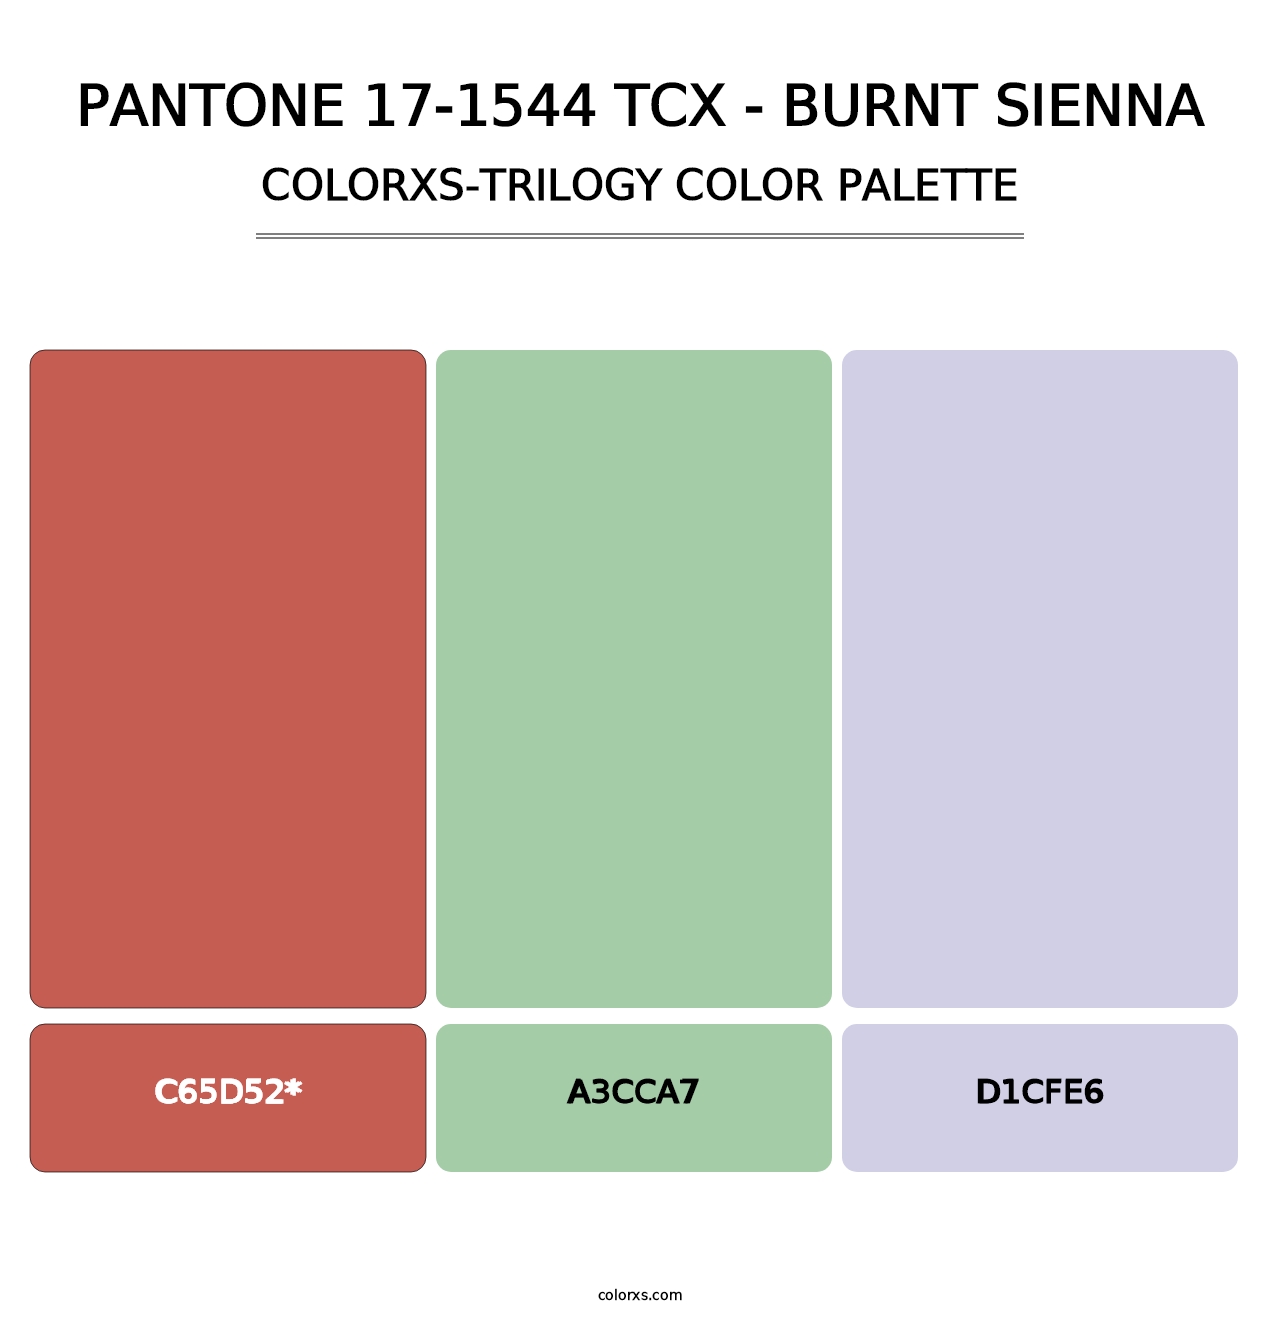 PANTONE 17-1544 TCX - Burnt Sienna - Colorxs Trilogy Palette